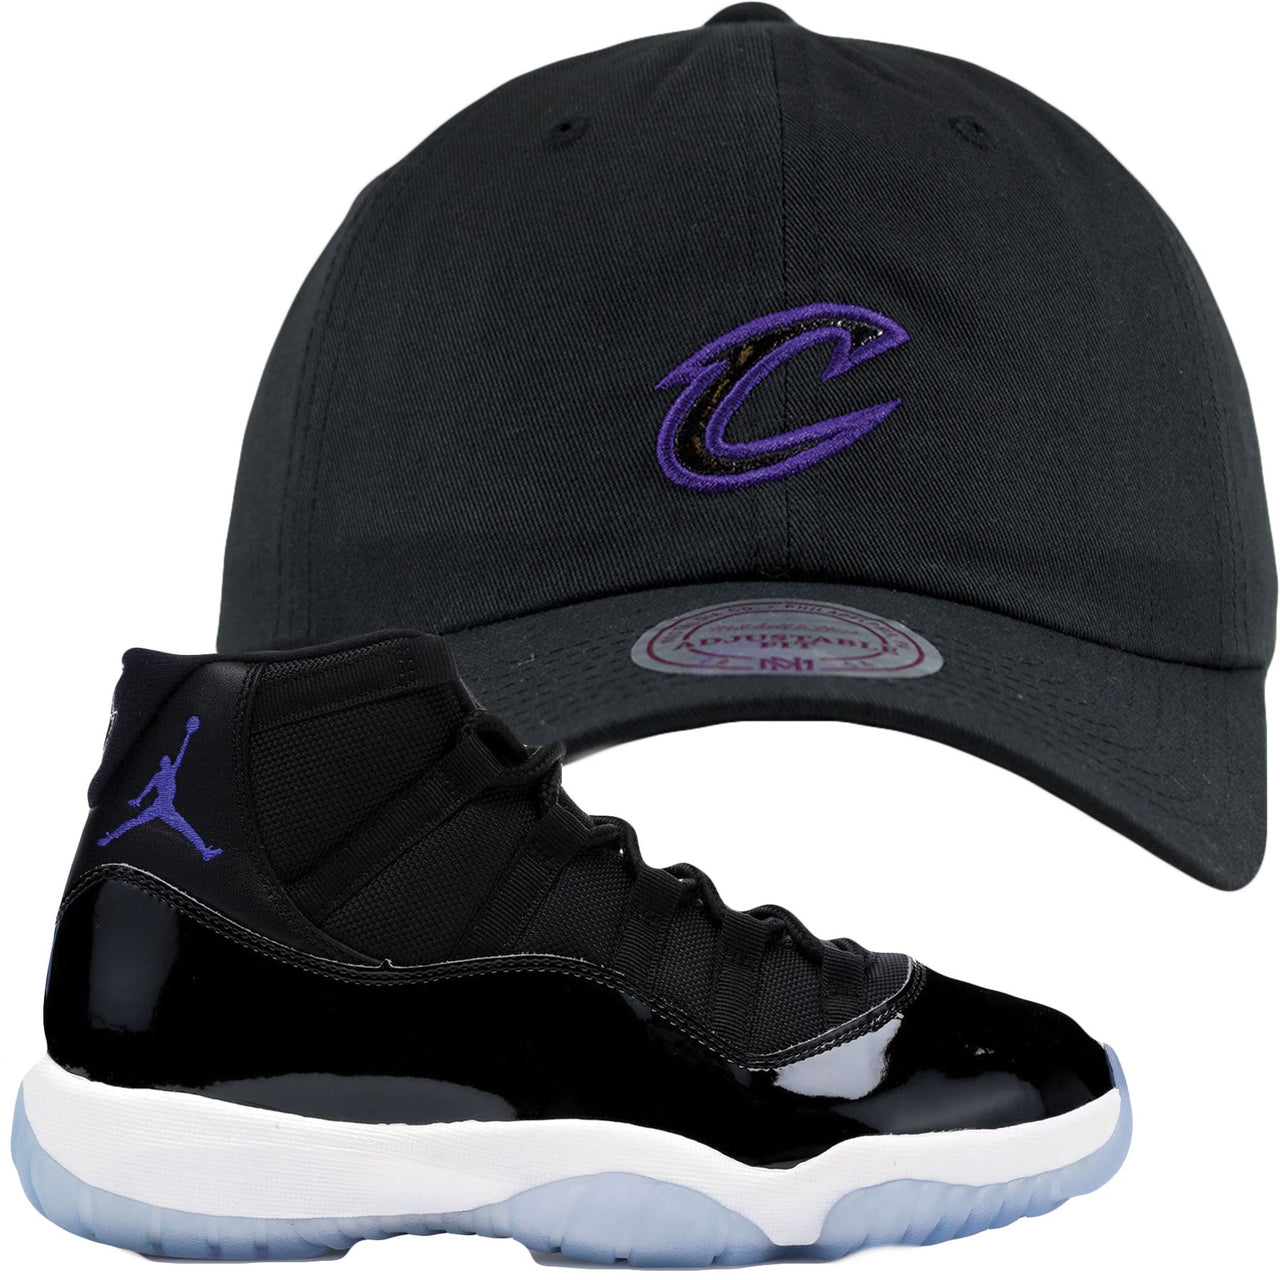 Space Jam 11s Sneaker Hook Up Cleveland Cavaliers Dad Hat